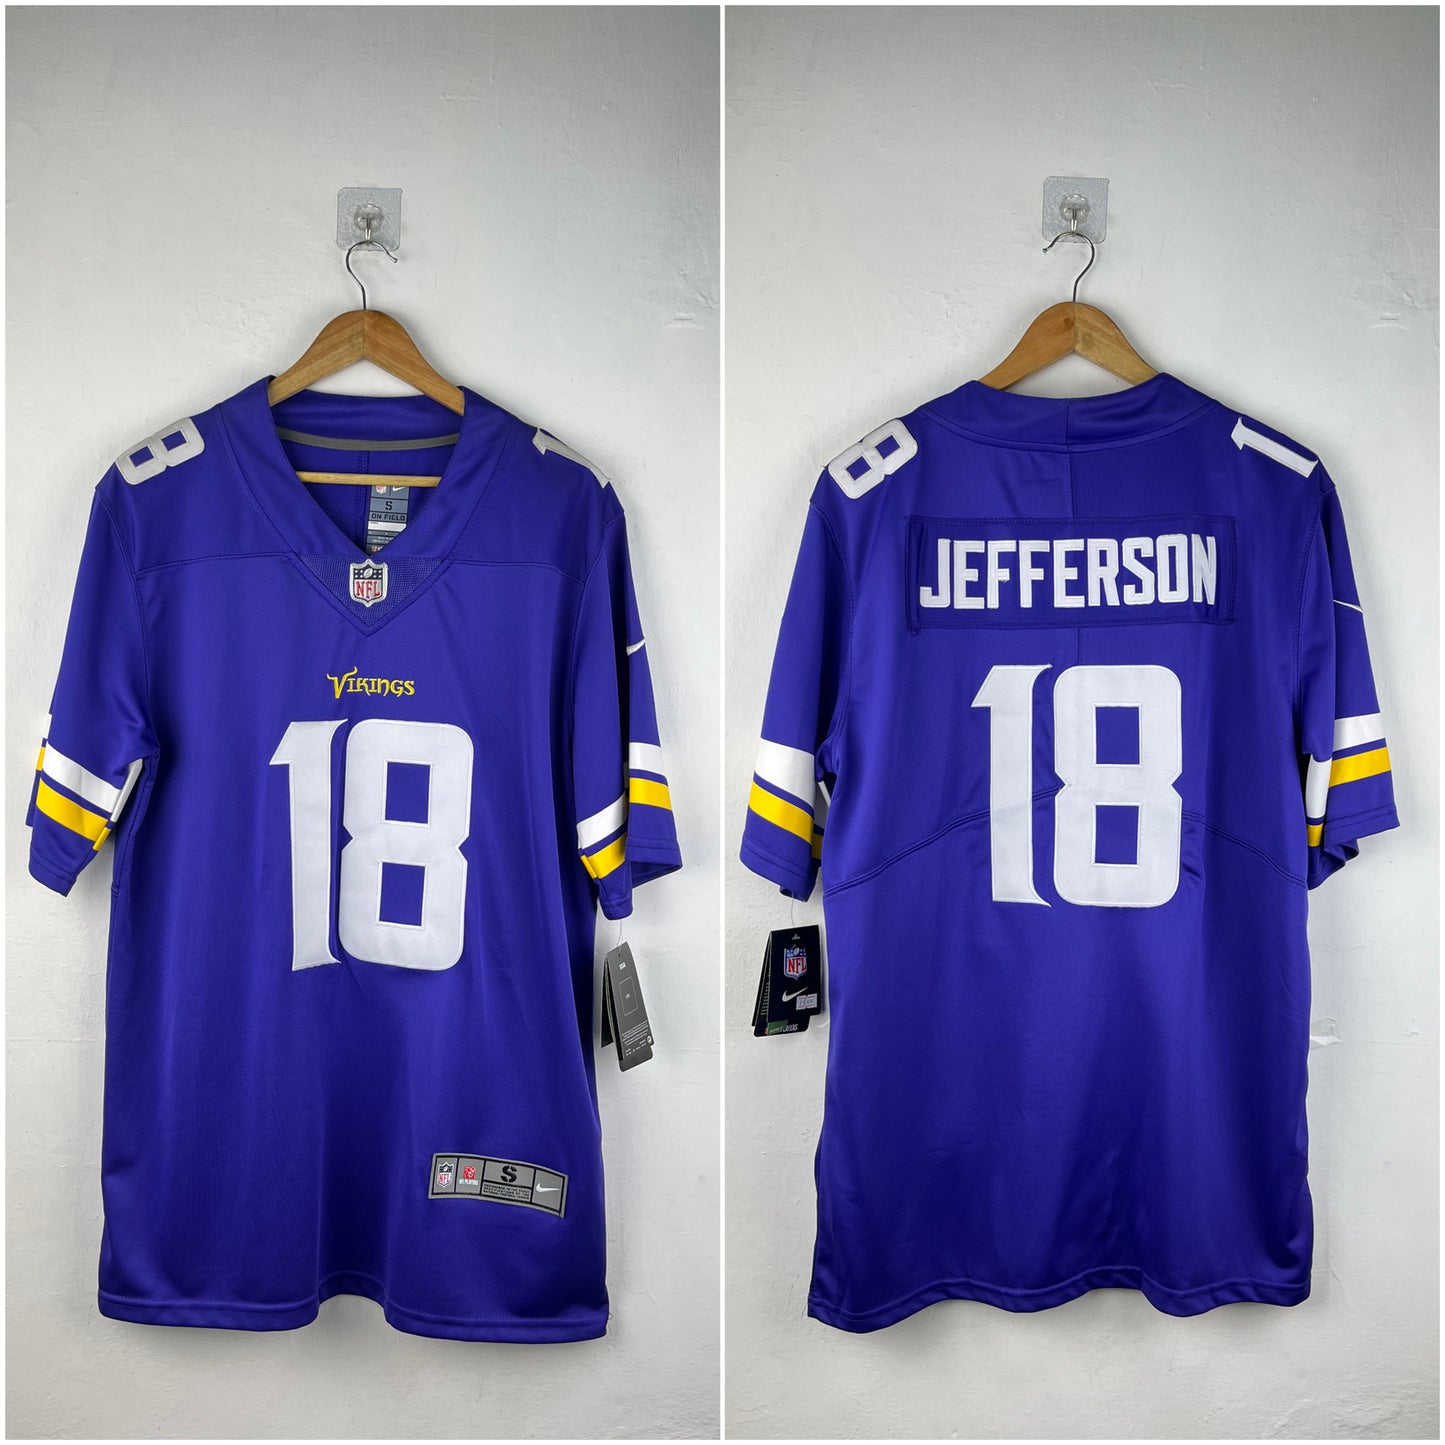 JEFFERSON 18 Purple Minnesota Vikings NFL Jersey